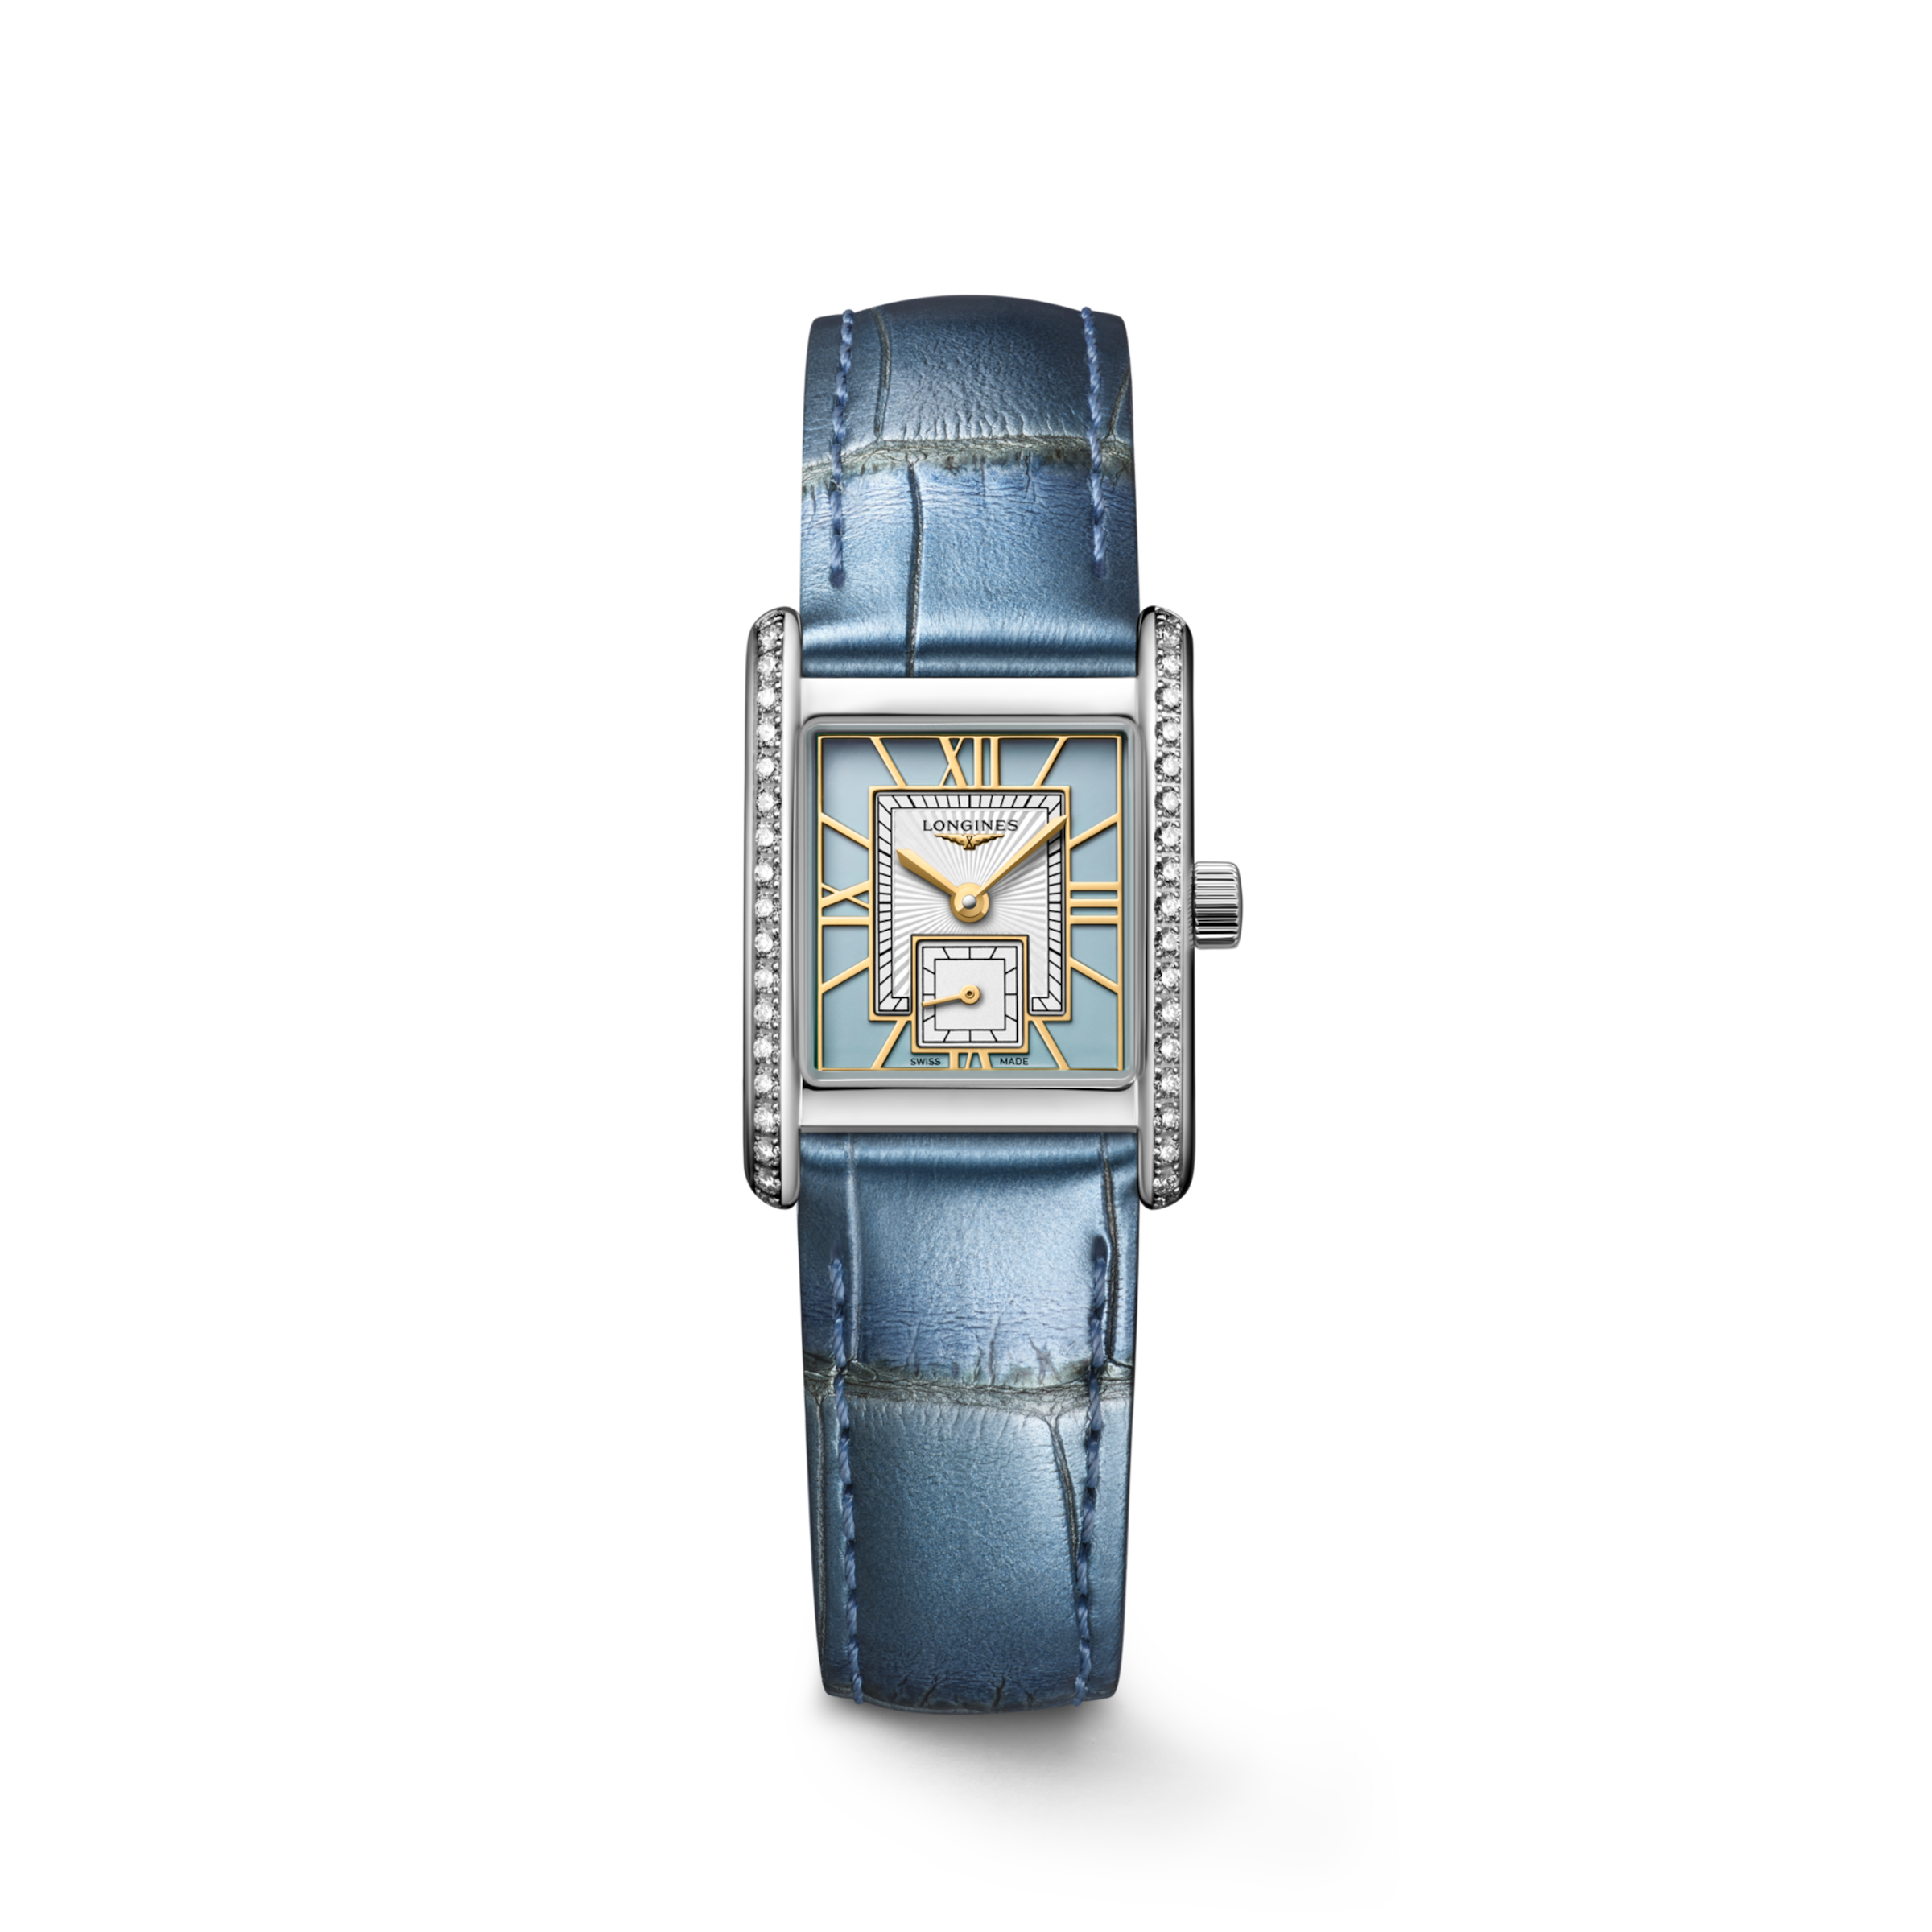 Longines MINI DOLCEVITA Quartz Stainless steel Watch - L5.200.0.95.2